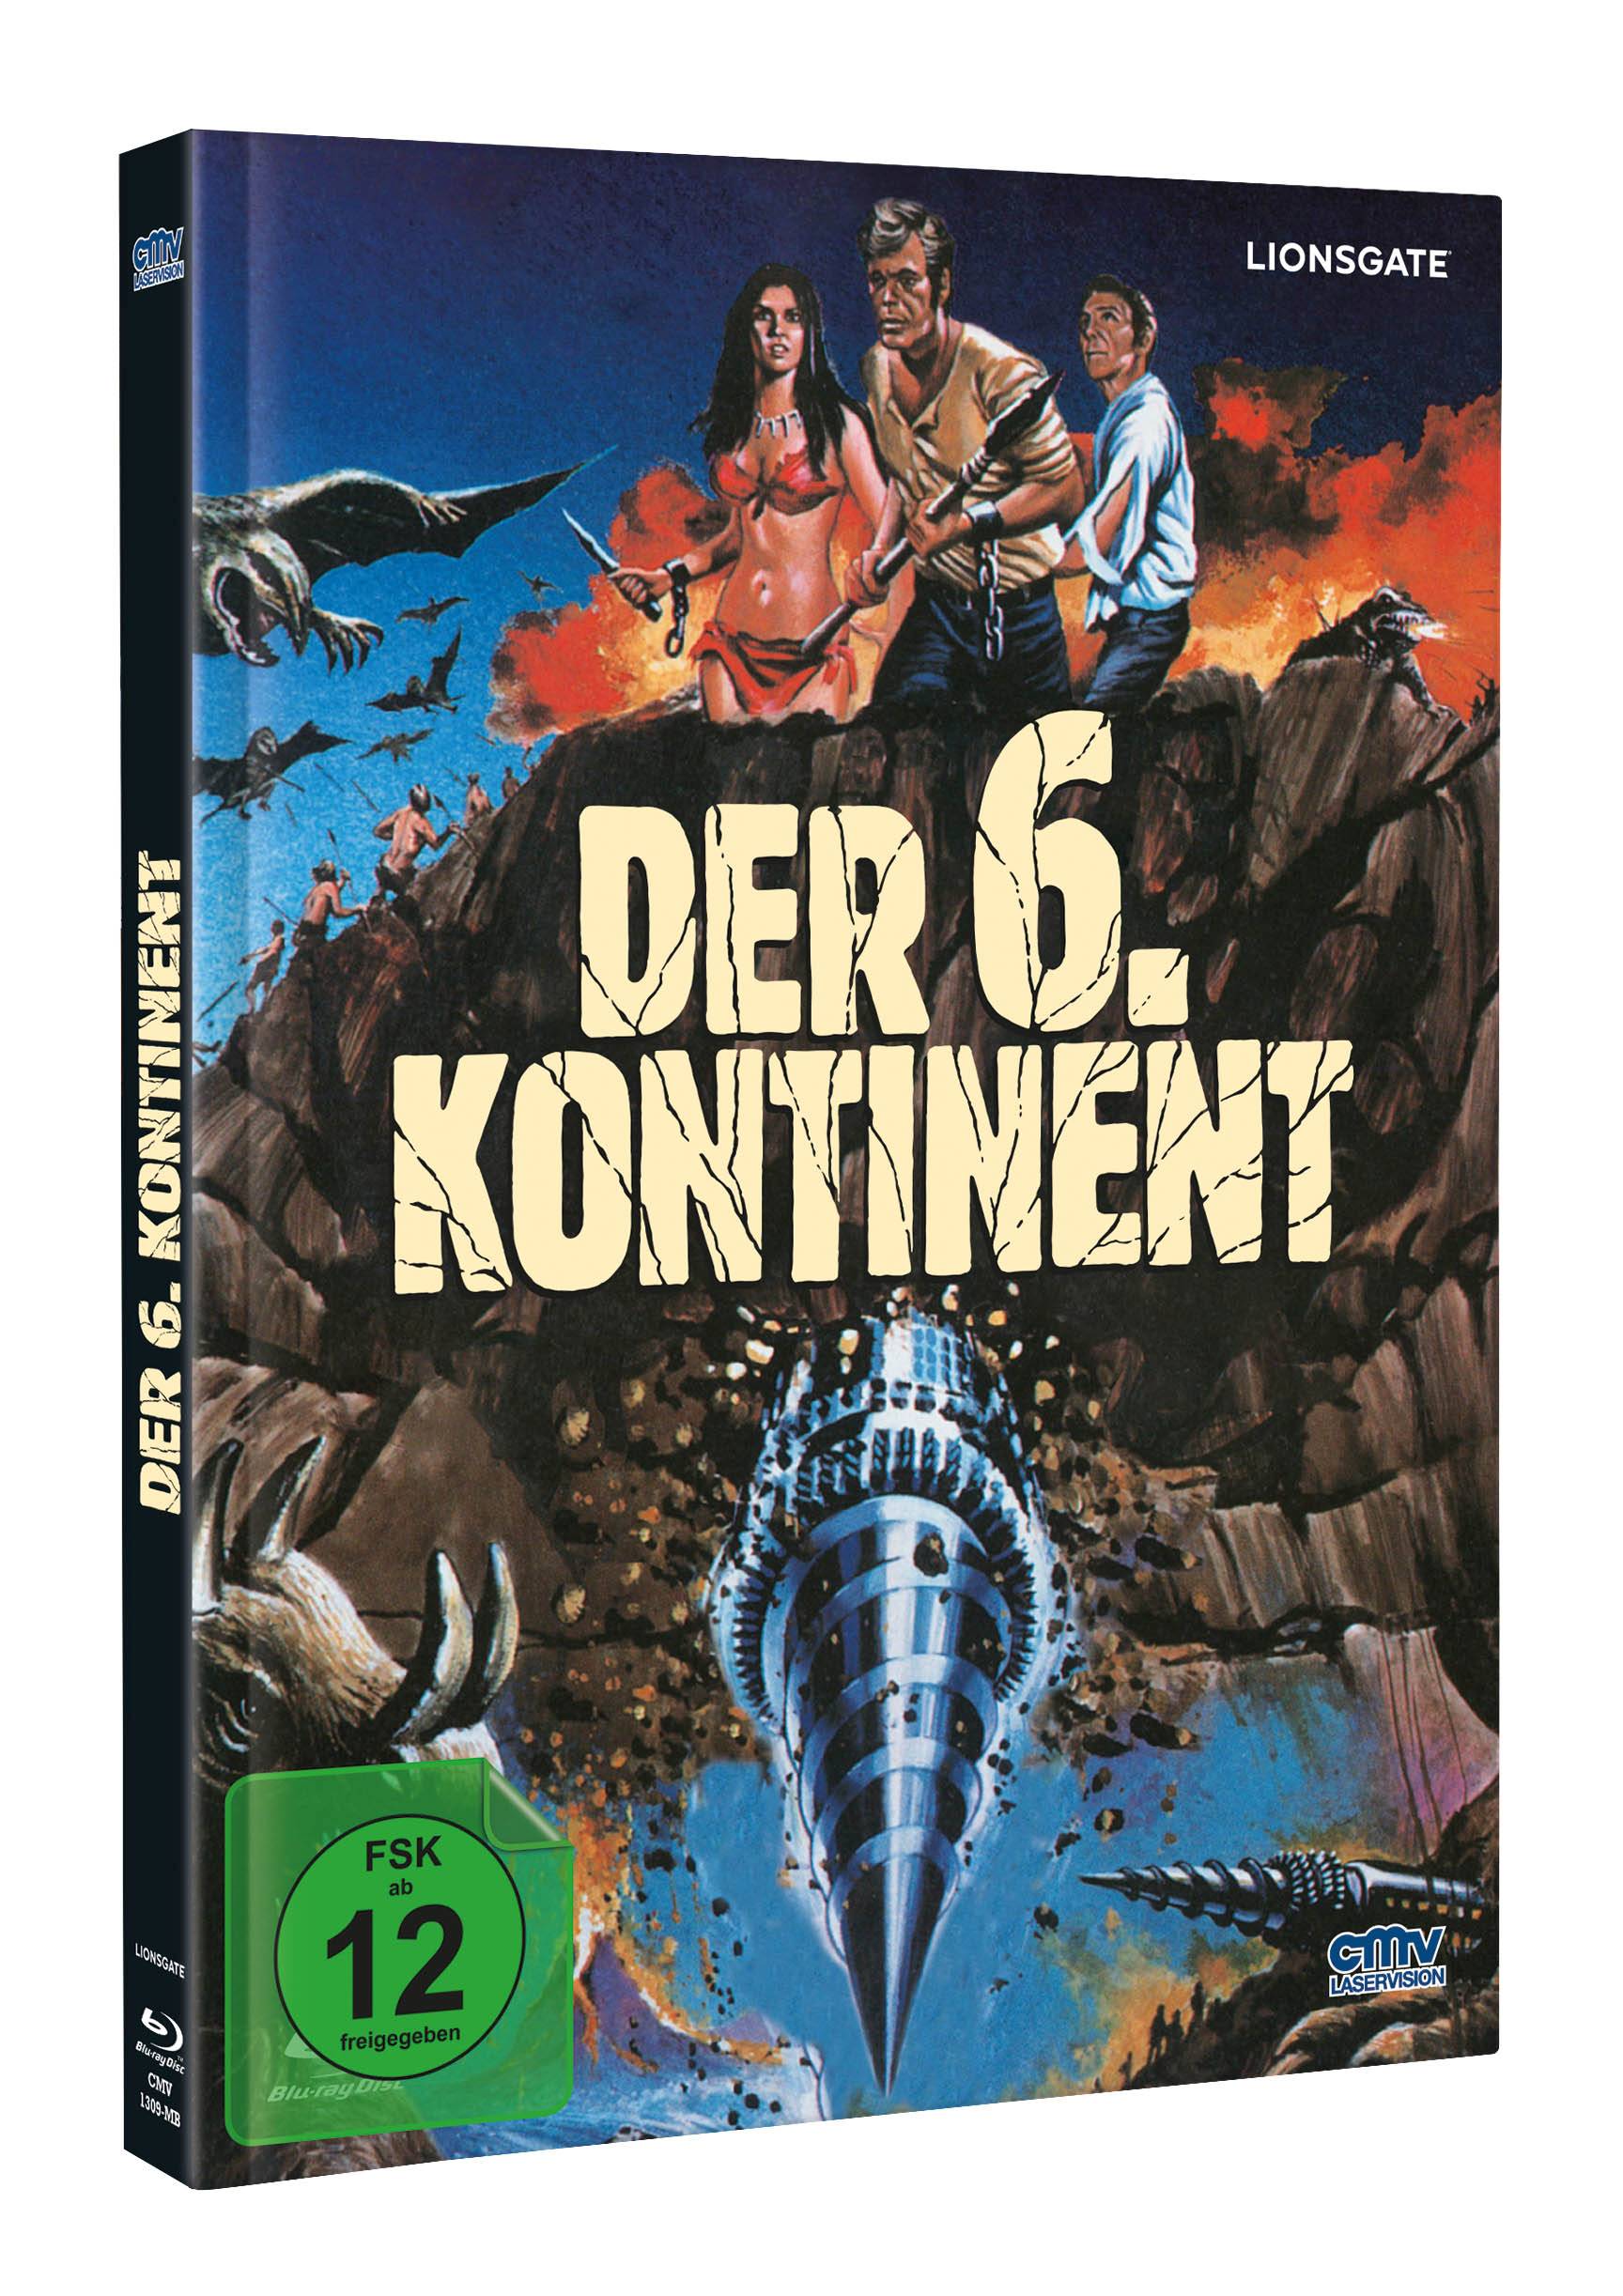 Der 6. Kontinent (DVD + Blu-ray) (Limitiertes Mediabook) (Cover A)